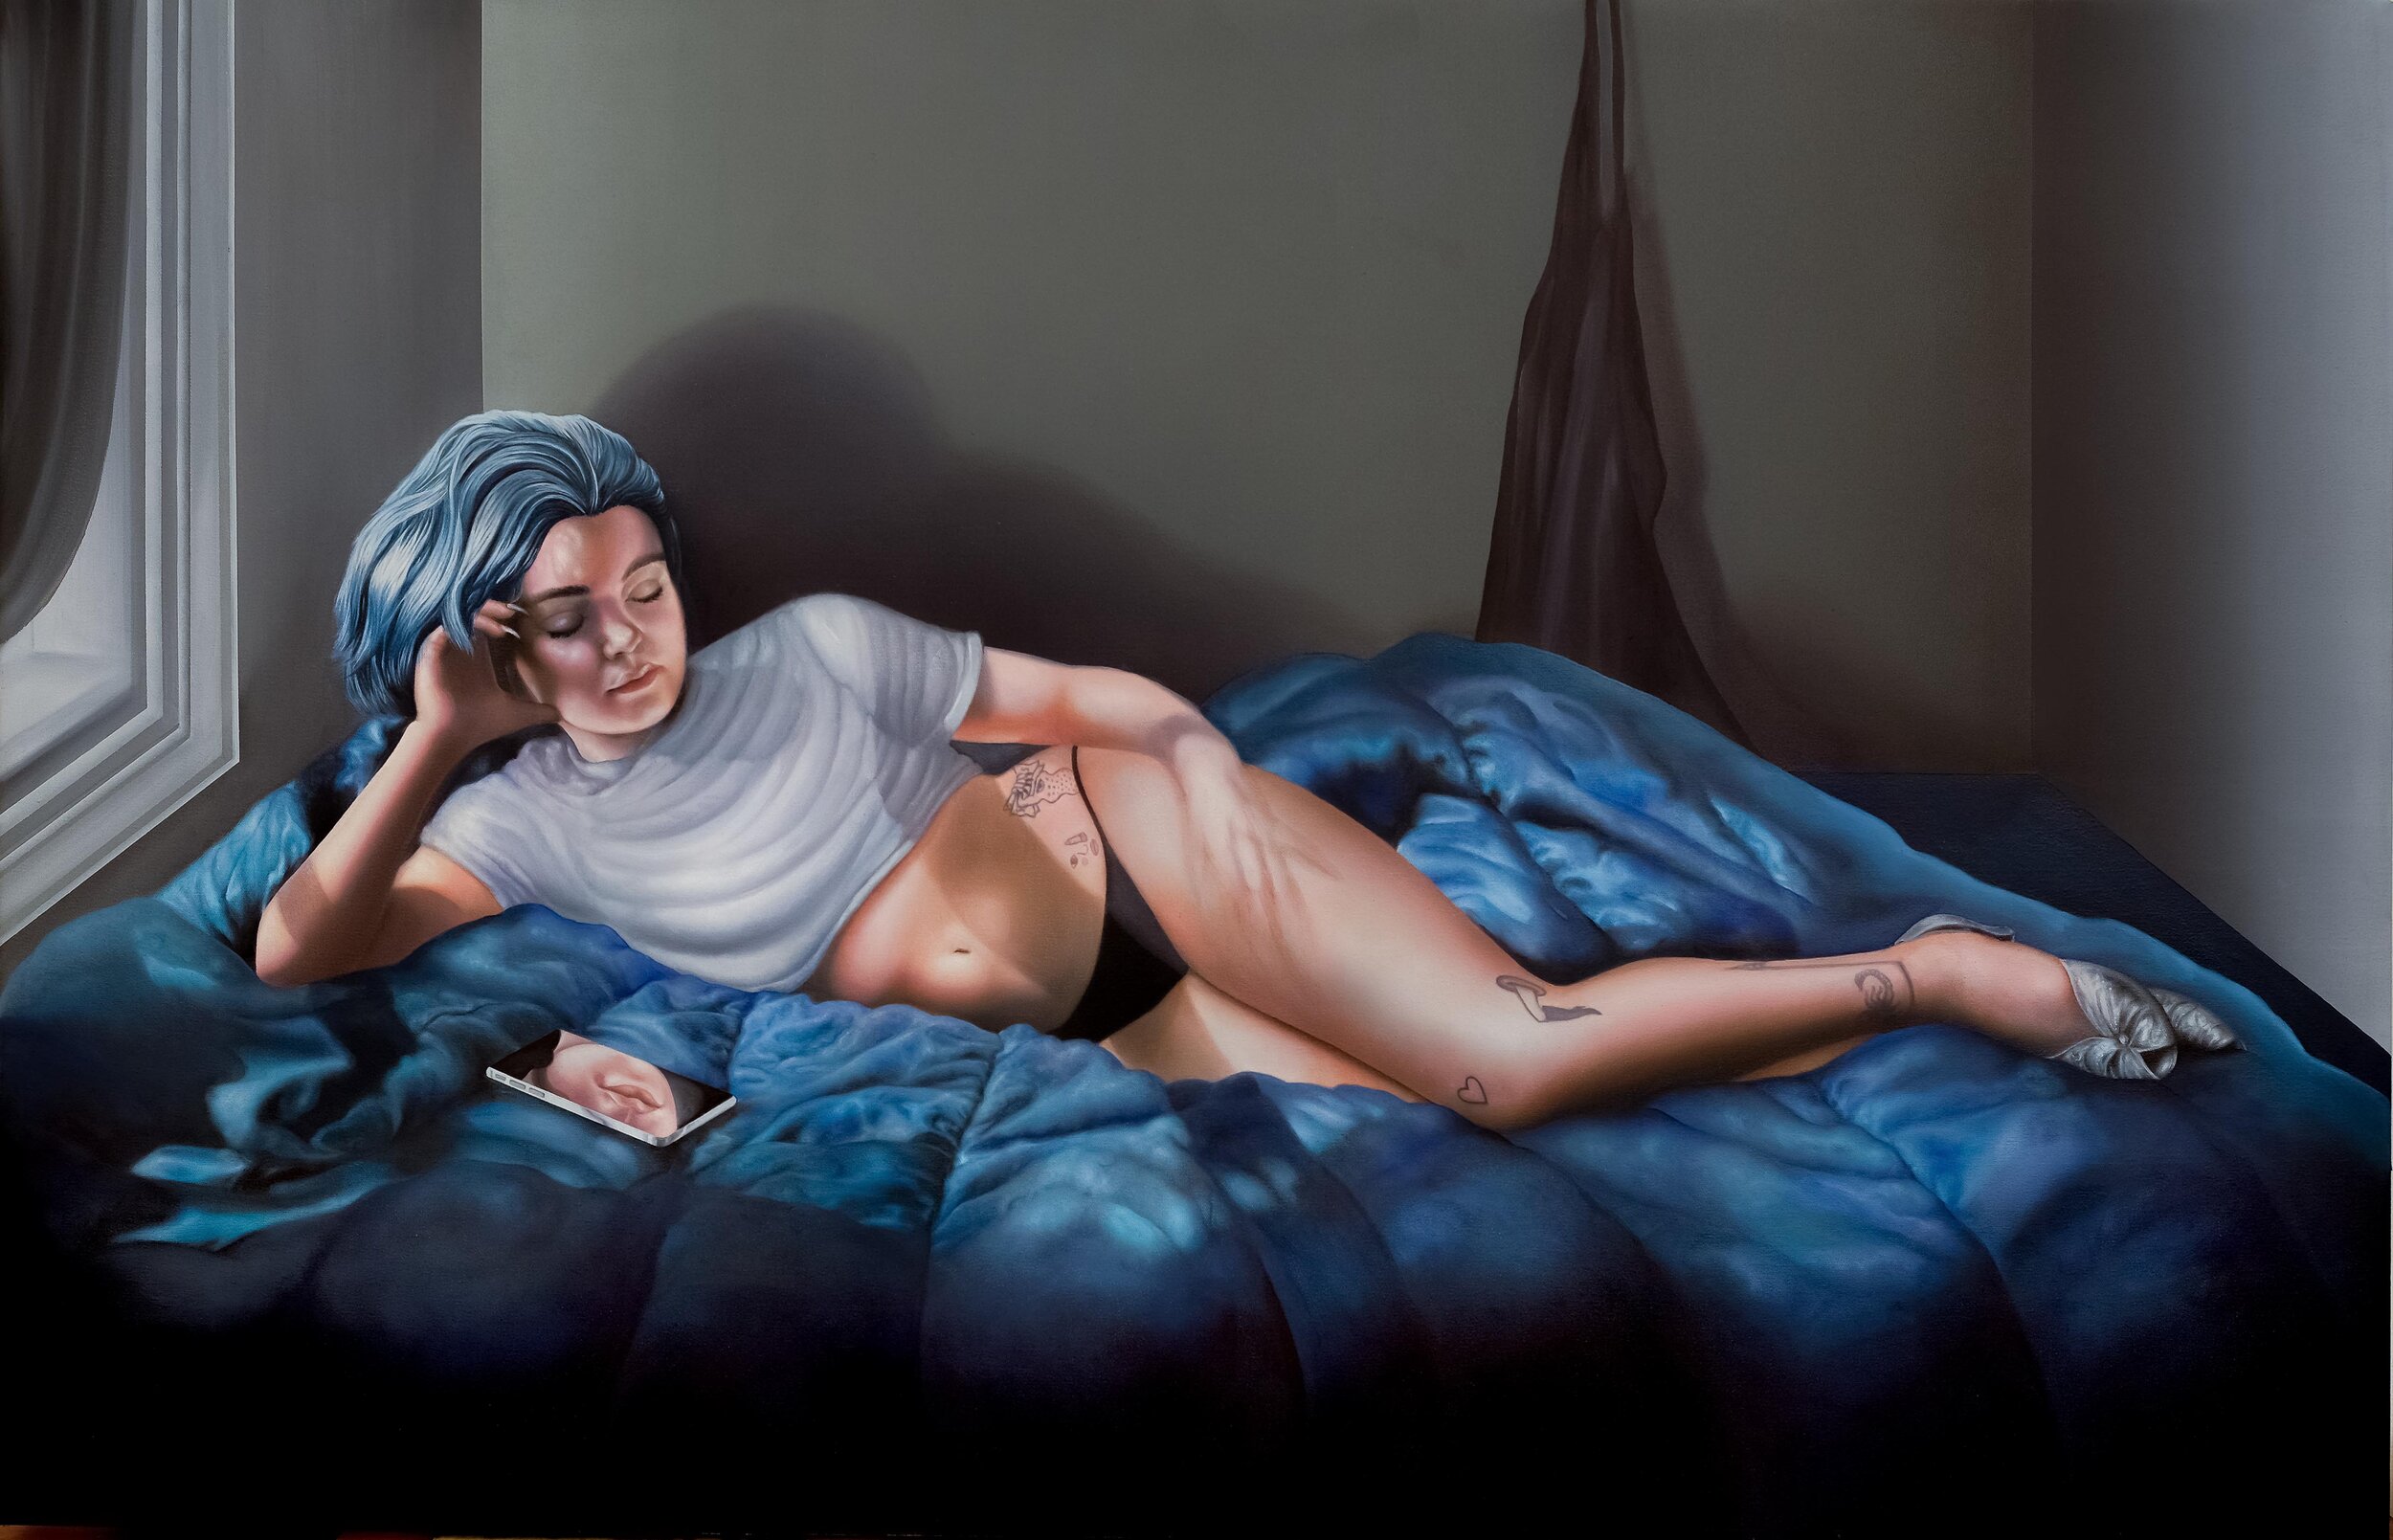  Alannah Farrell,  Sanctuary (Magdalena) , 2019, Oil on canvas, 36 x 56 inches. 